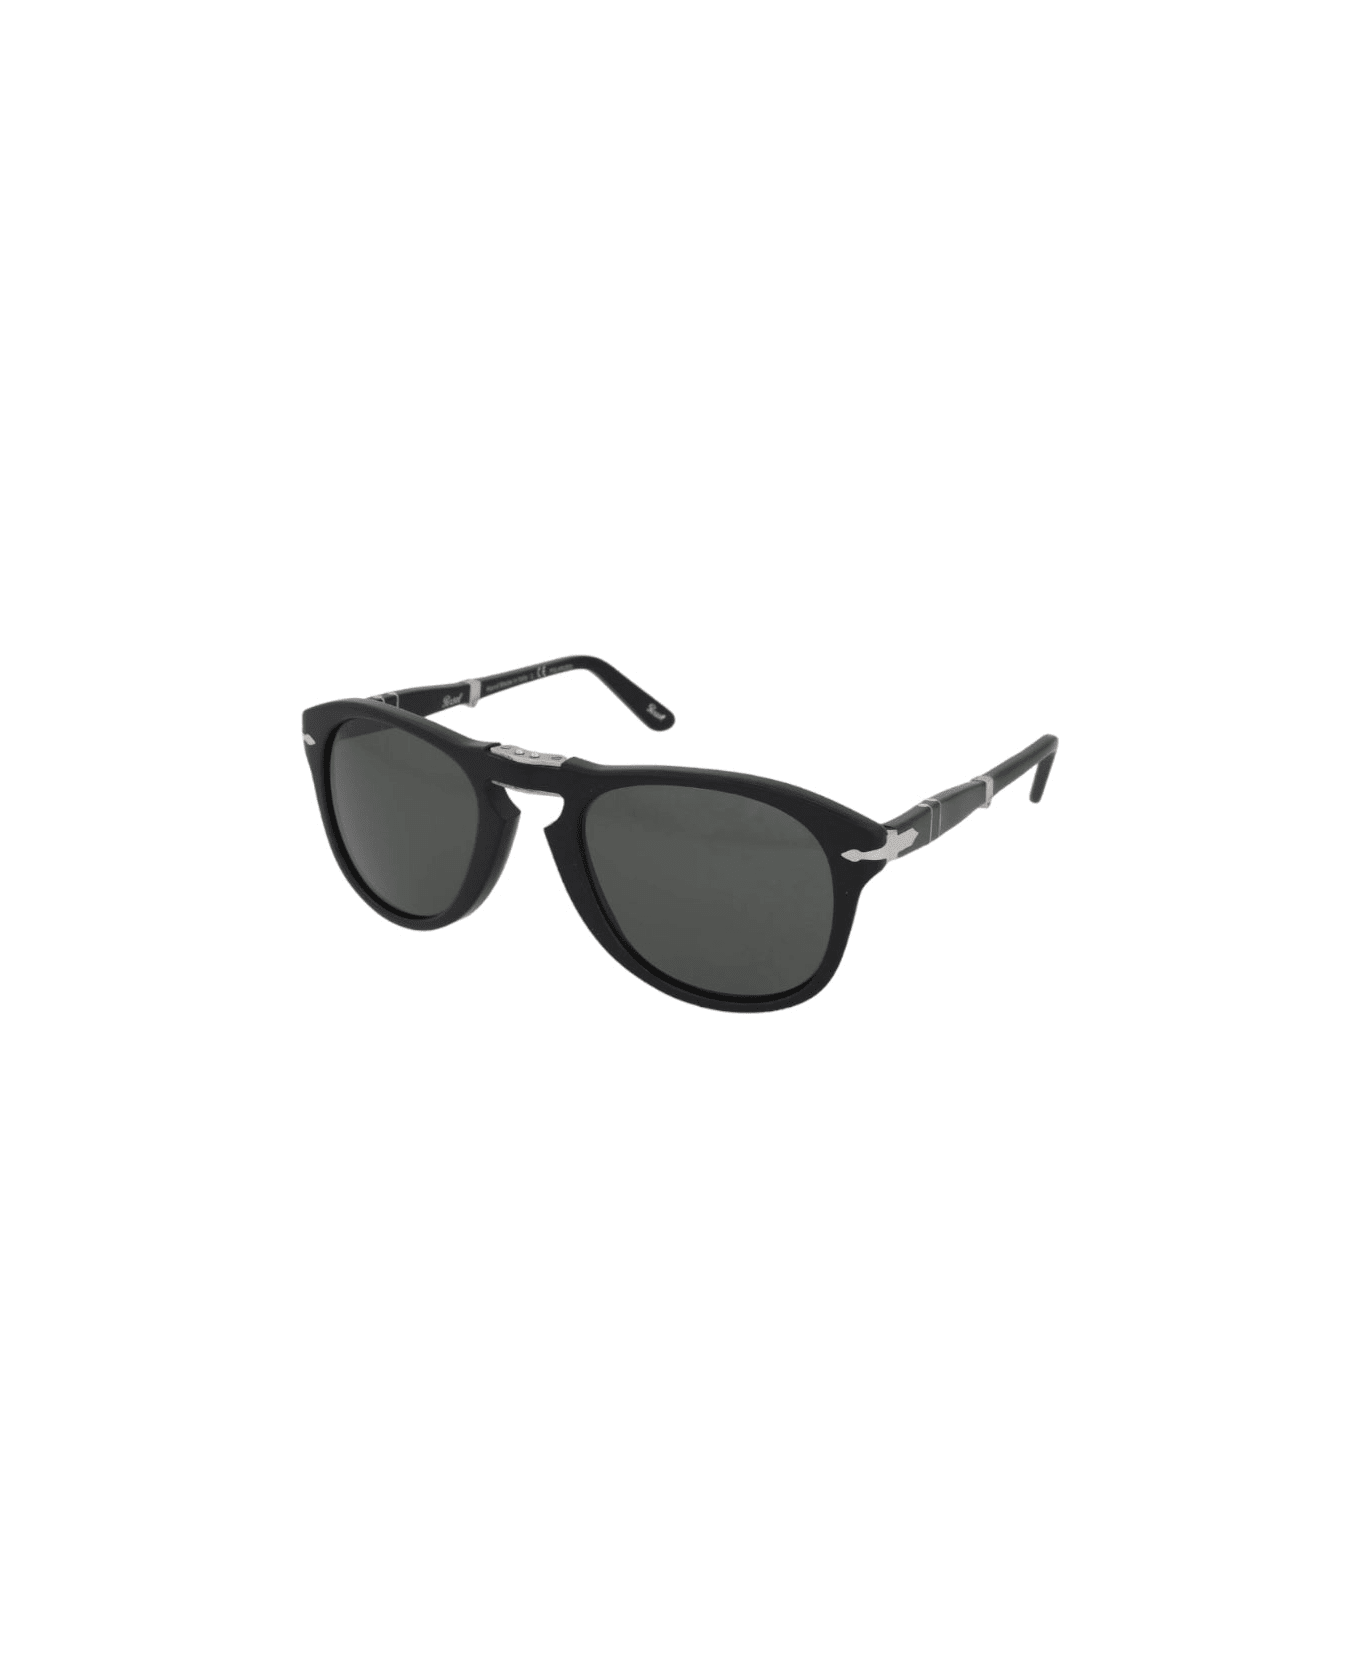 Persol 714 - Steve Mc Queen Sunglasses サングラス